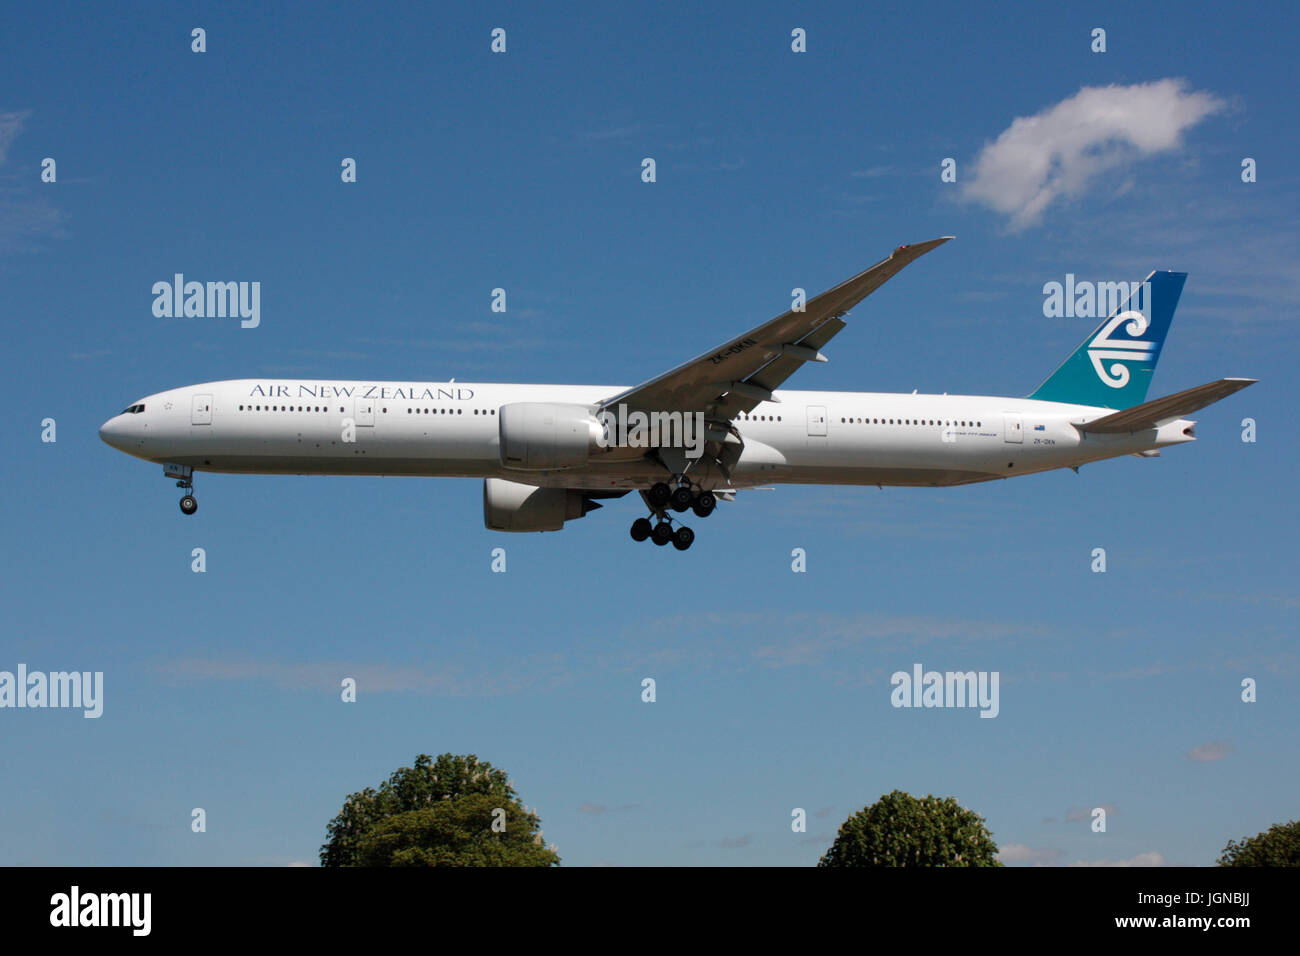 International air travel. Air New Zealand Boeing 777-300ER long haul airliner on approach to Heathrow after an intercontinental flight Stock Photo